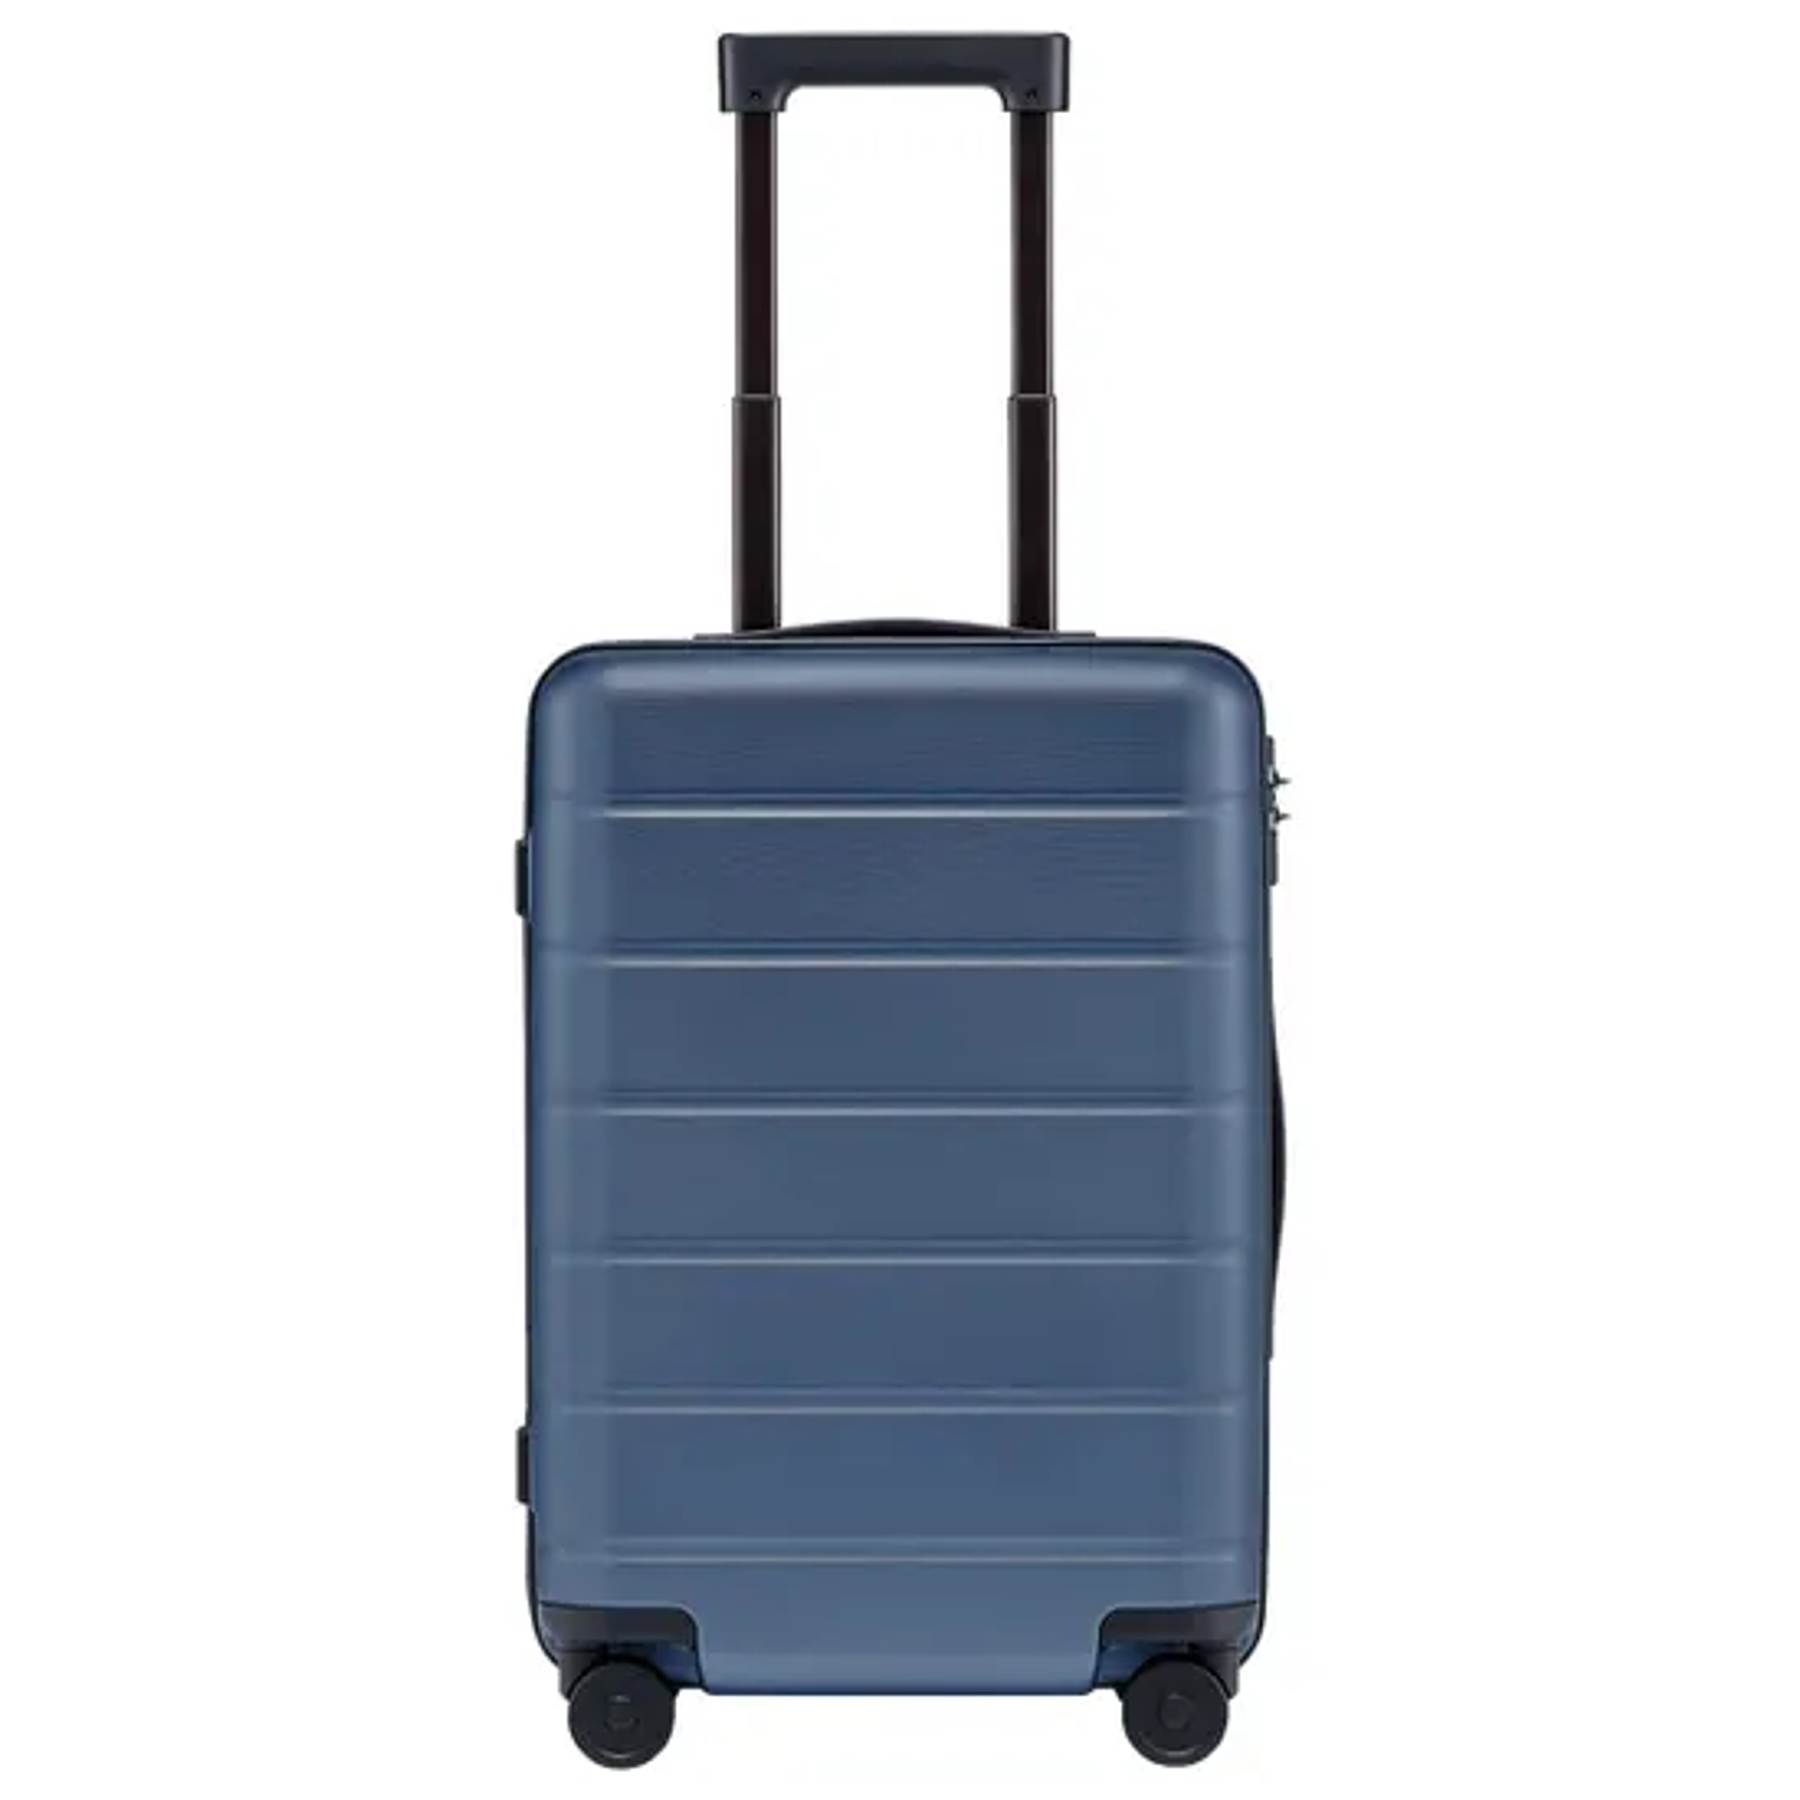 Xiaomi Backpack Luggage Maleta de Viaje Color Azul